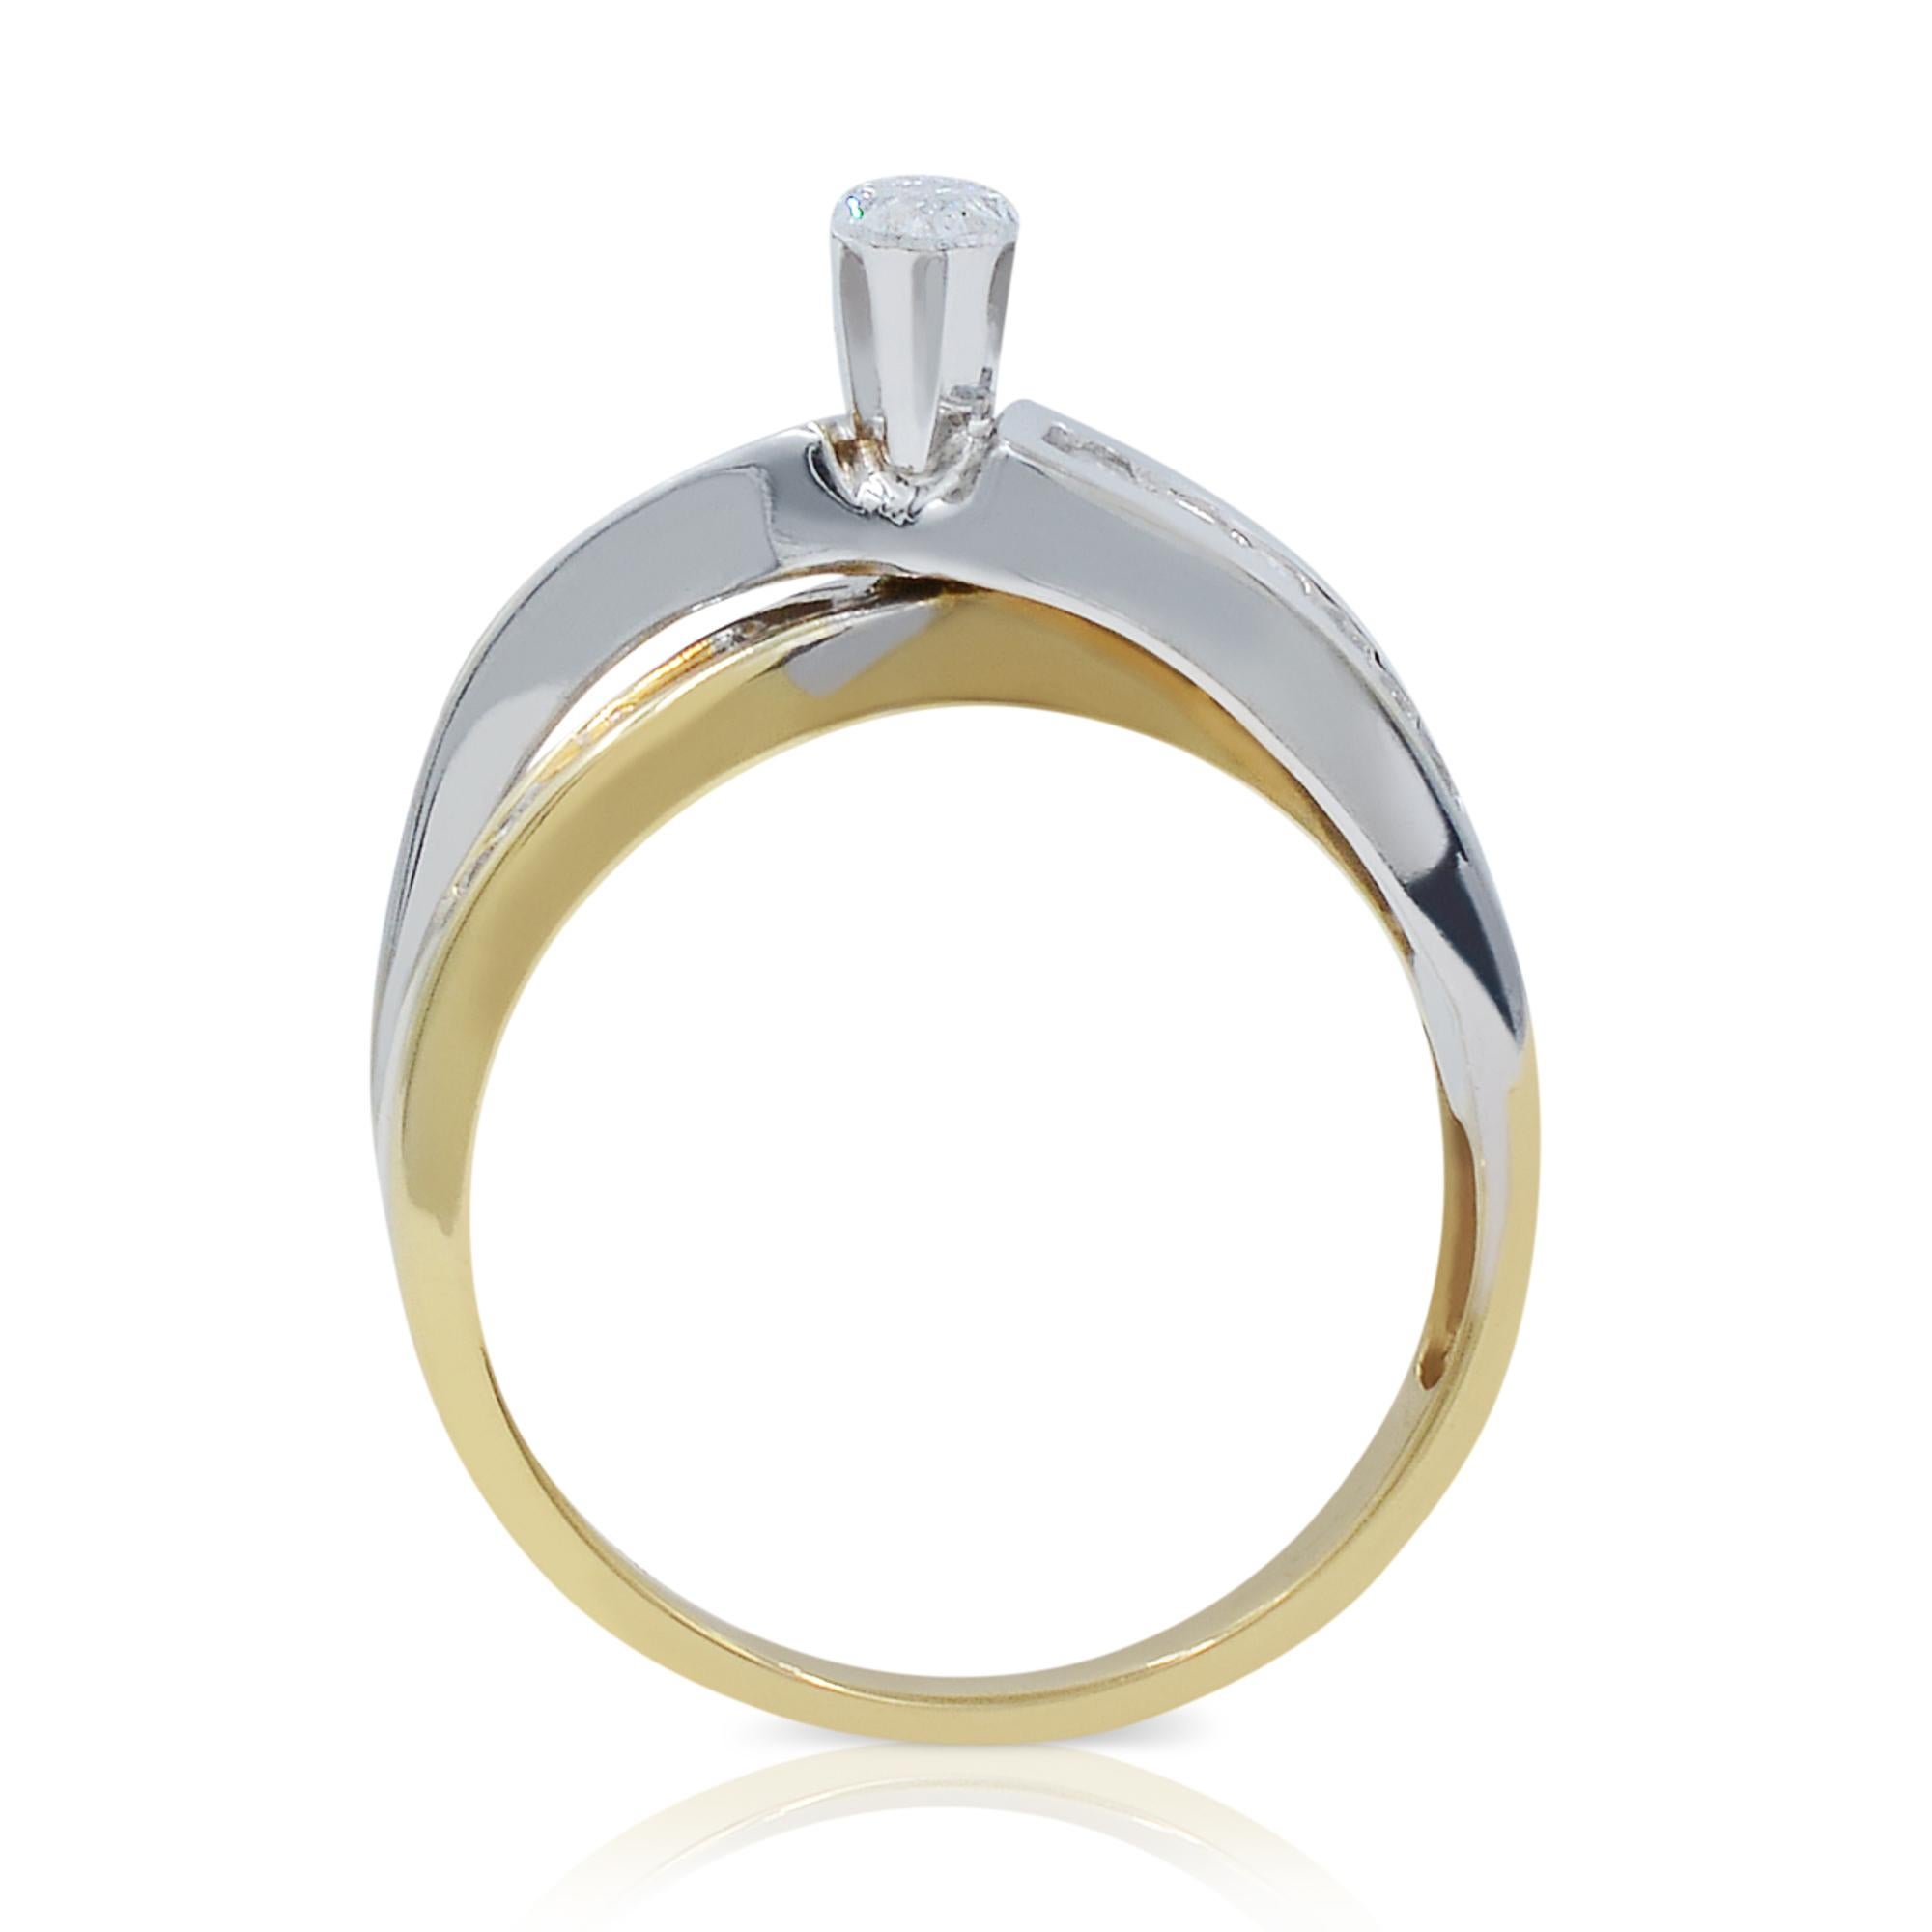 Rachel Koen Marquise Cut Diamond Engagement Ring Set 14K Yellow Gold 1.05Cttw For Sale 1